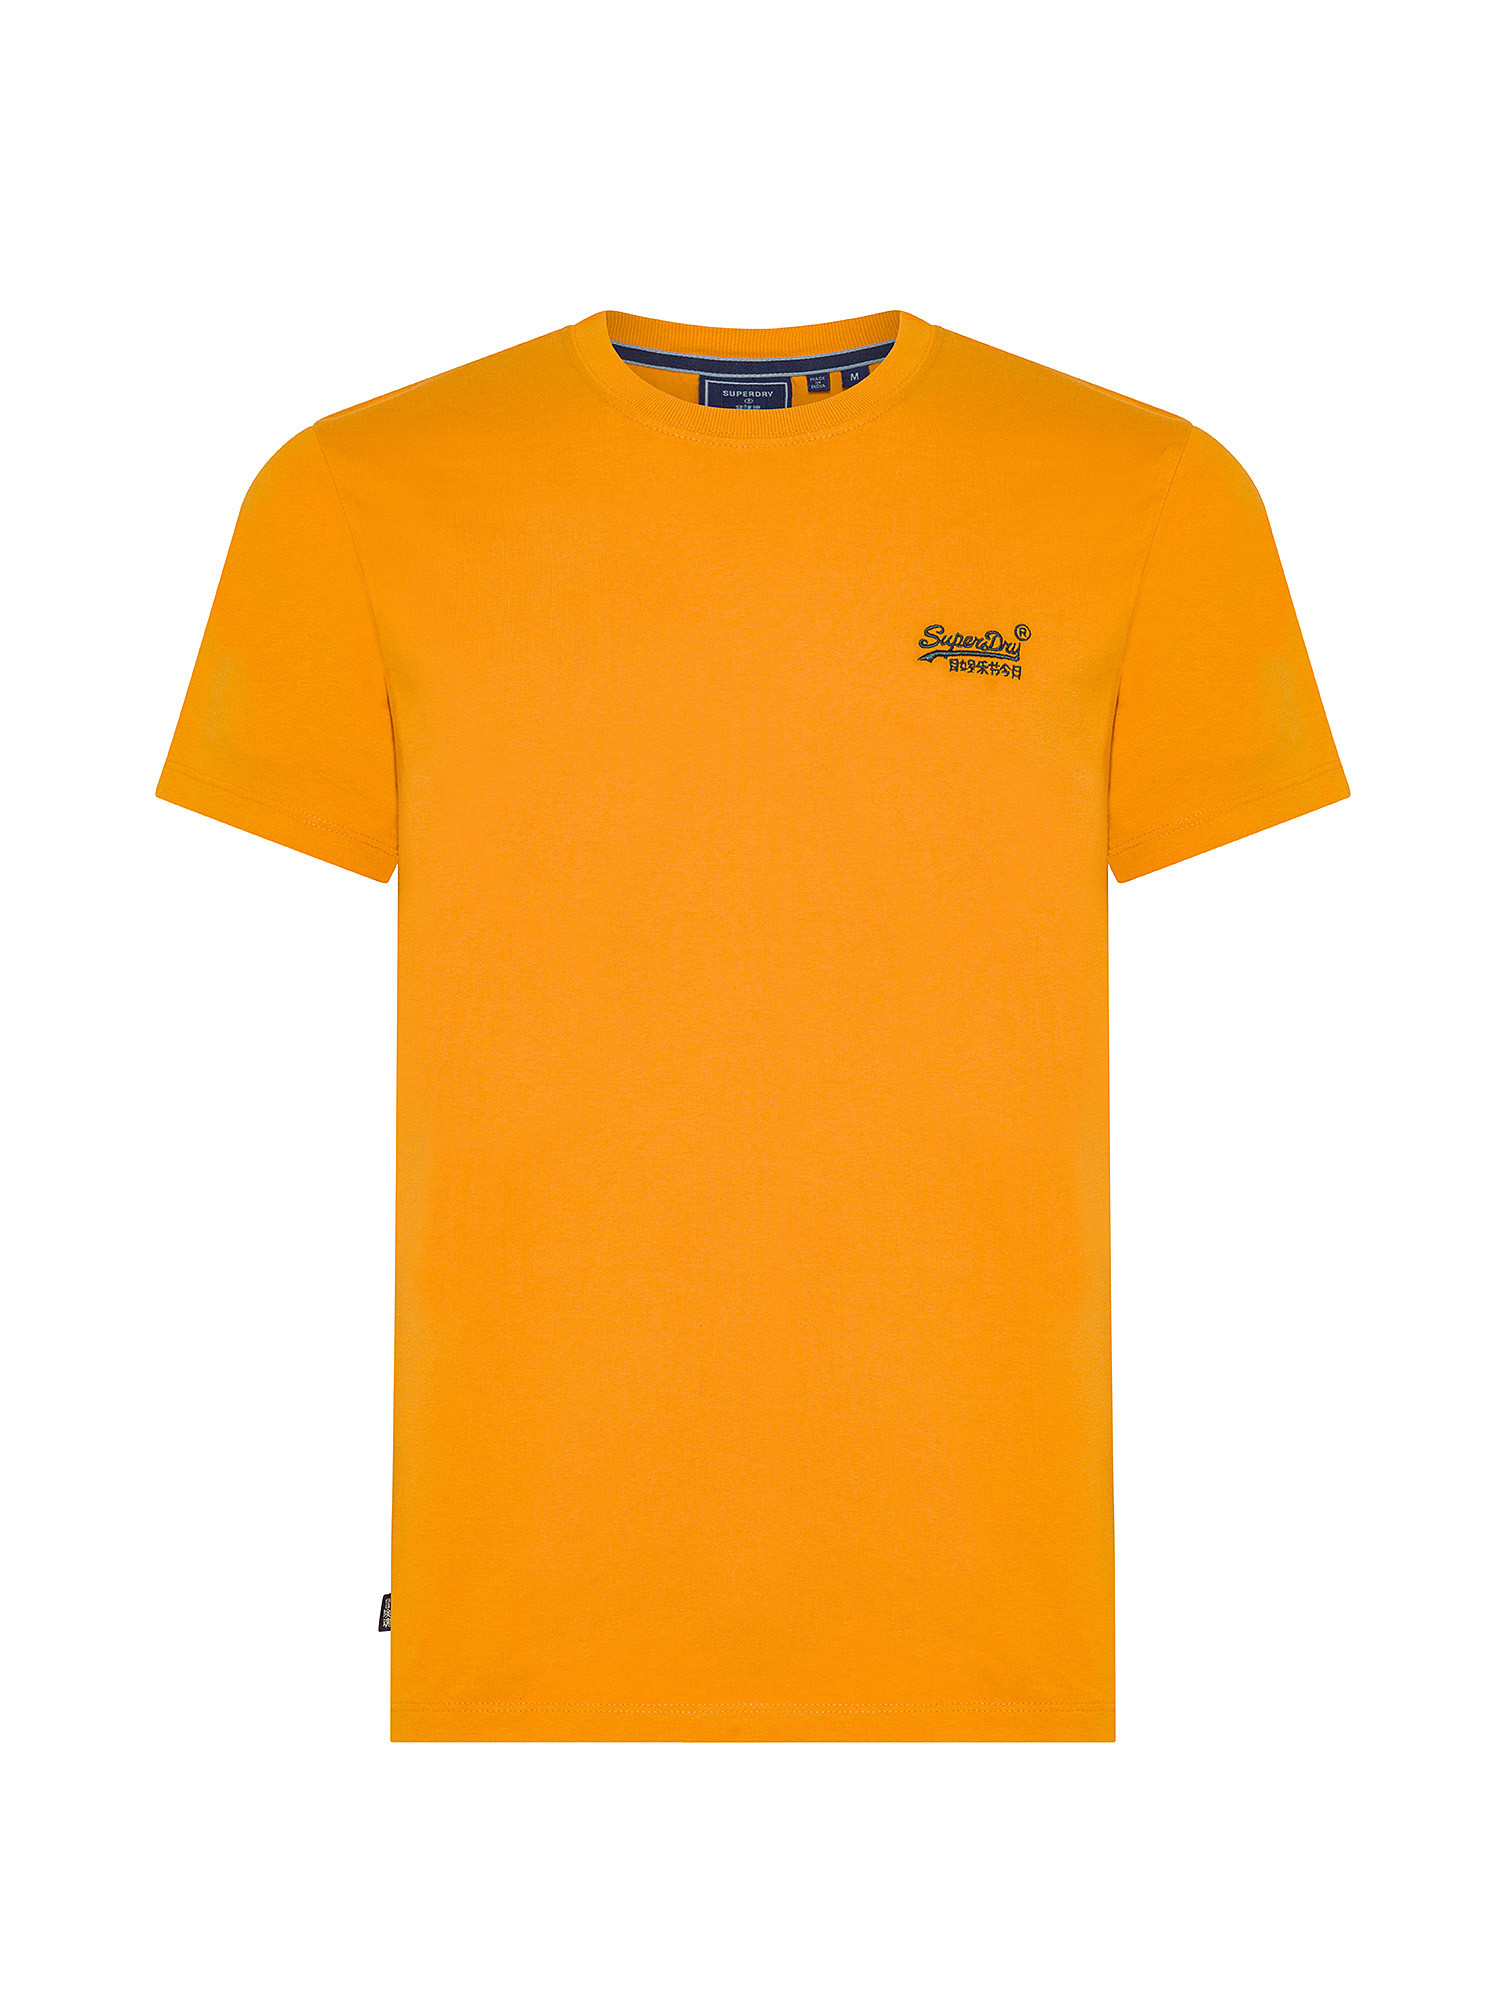 Superdry - T-shirt girocollo con logo, Arancione, large image number 0